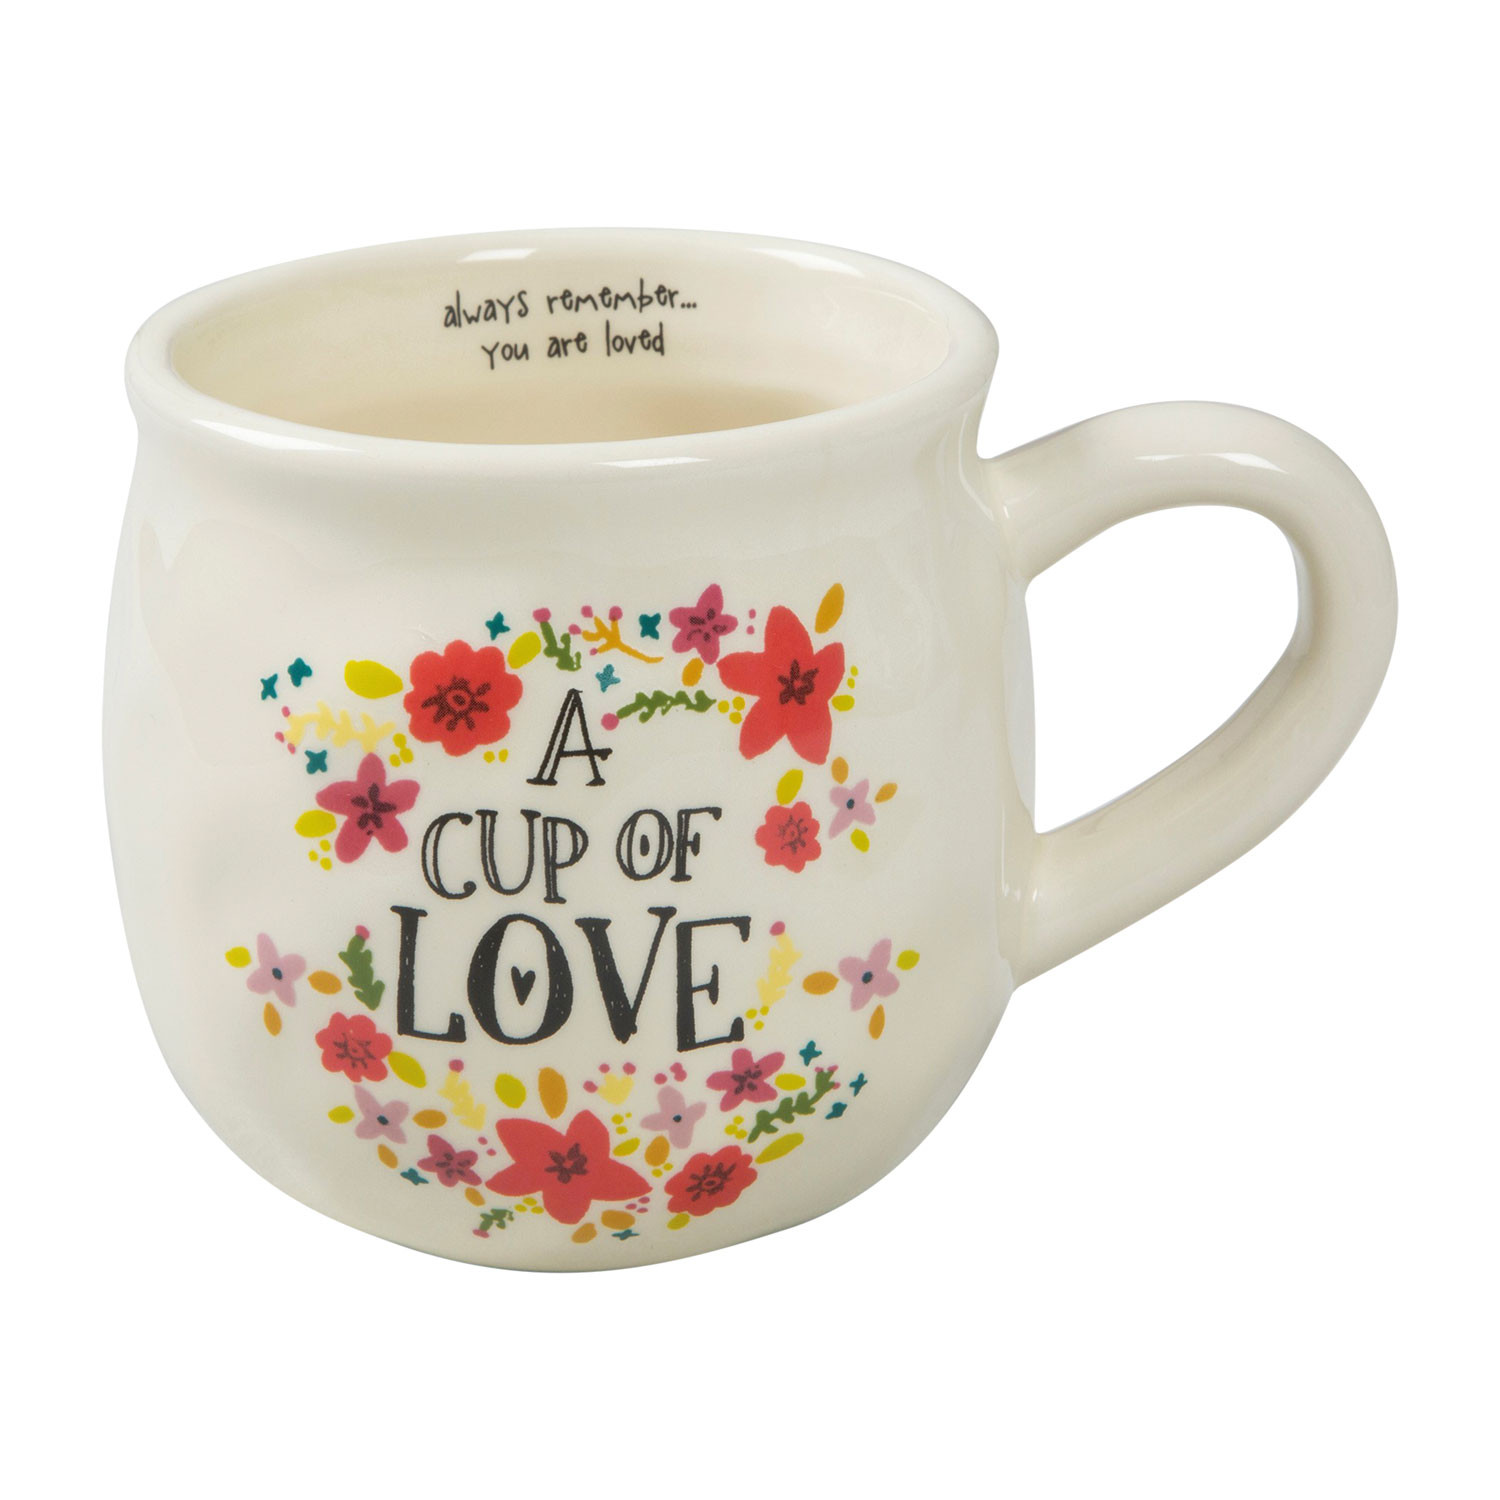 Cup Of Love Mug Signals 